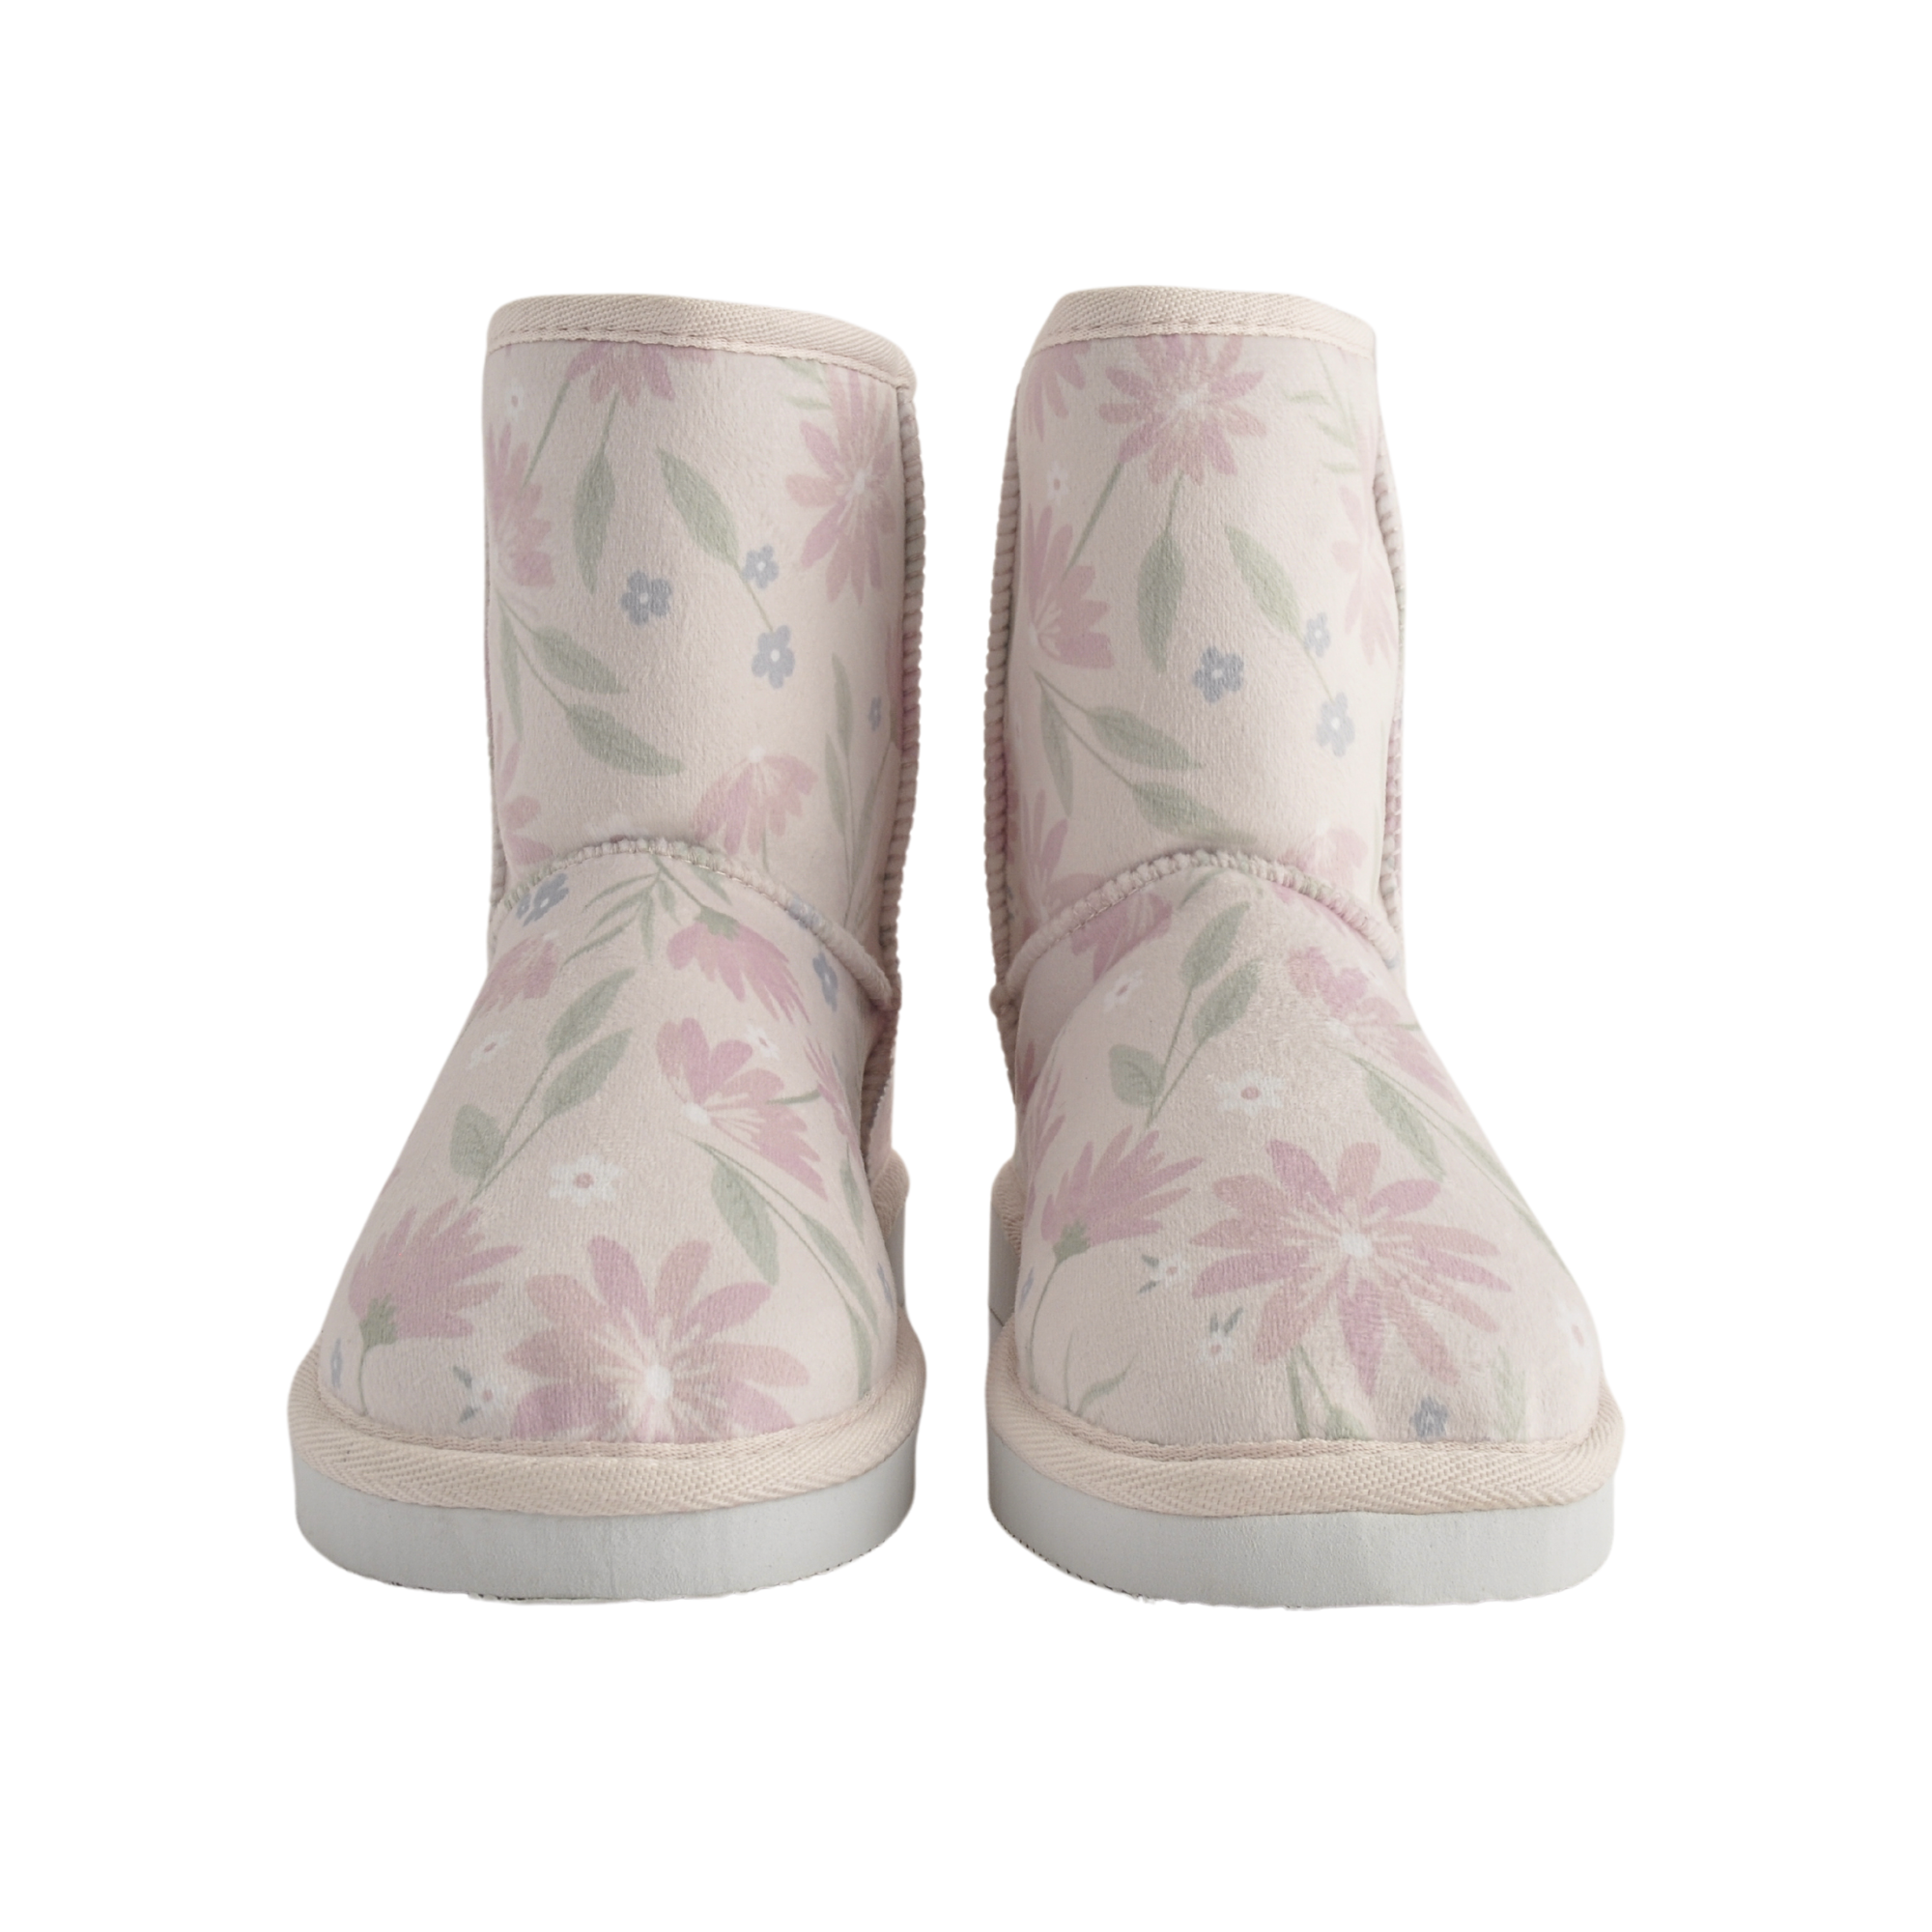 Printed Slipper Boots - Blushing Flora Size M